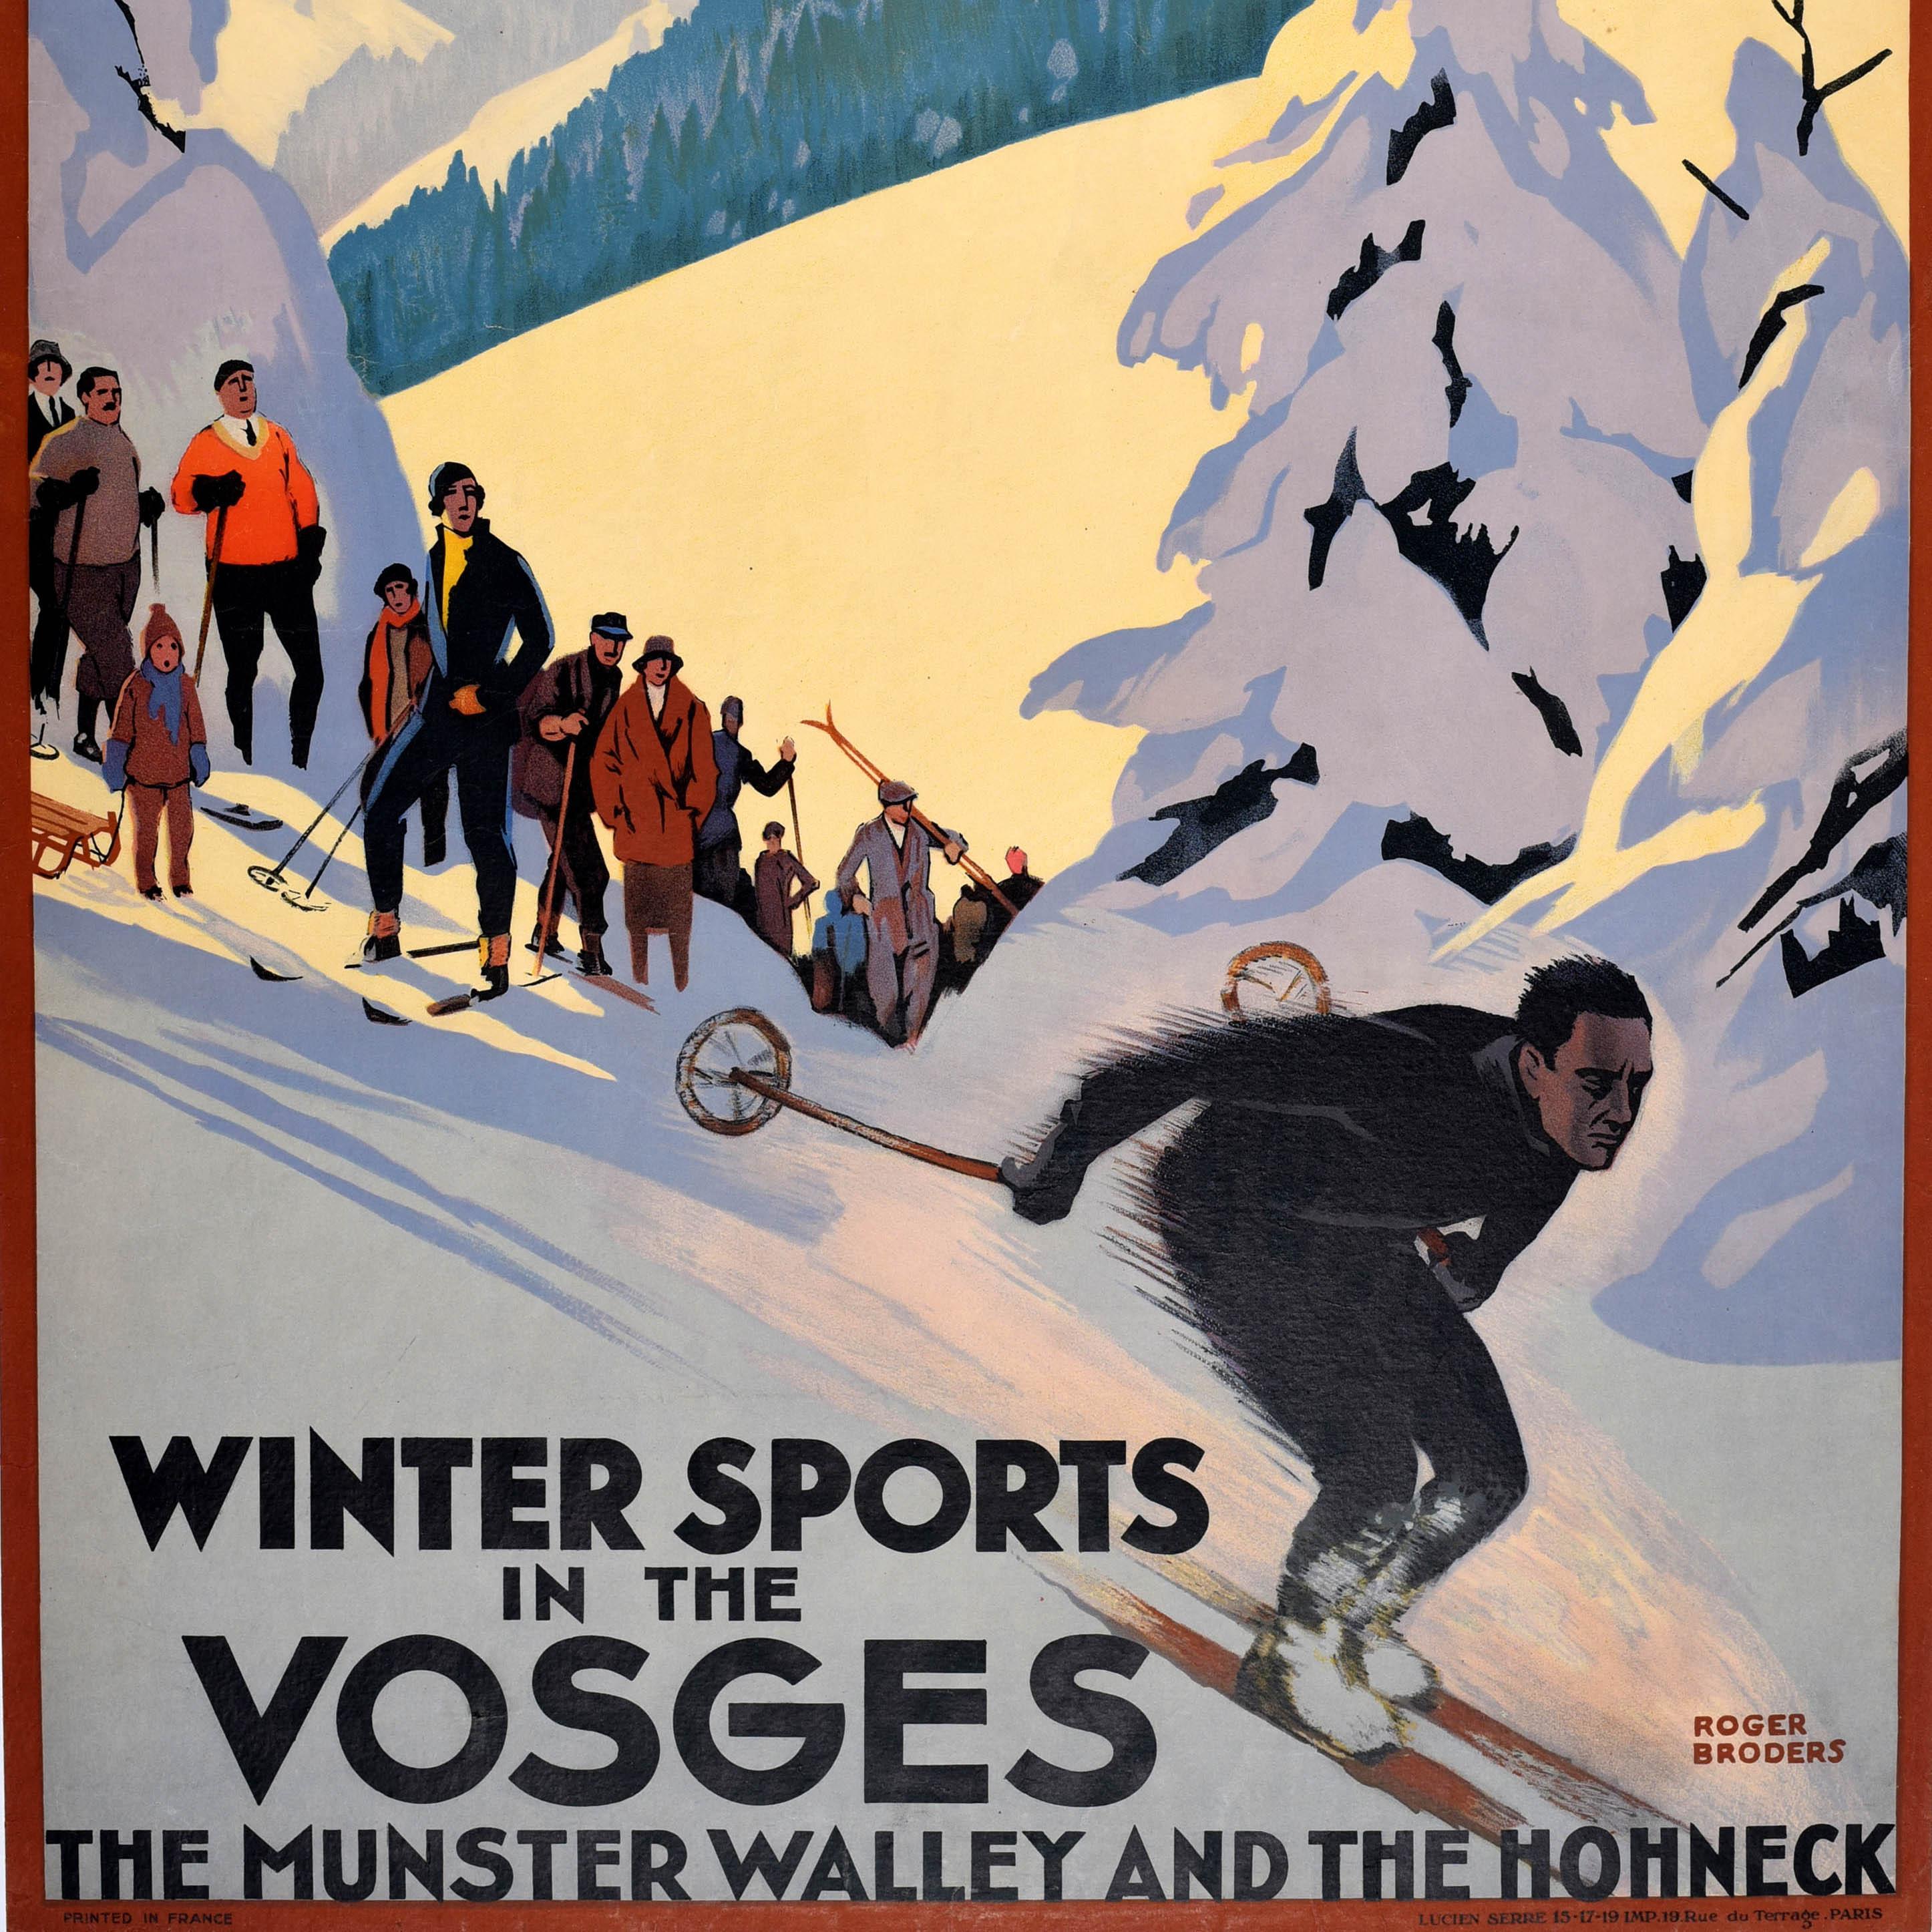 Original-Vintage-Ski-Reiseplakat, Wintersport, Vosges, Frankreich, Roger Broders im Angebot 2